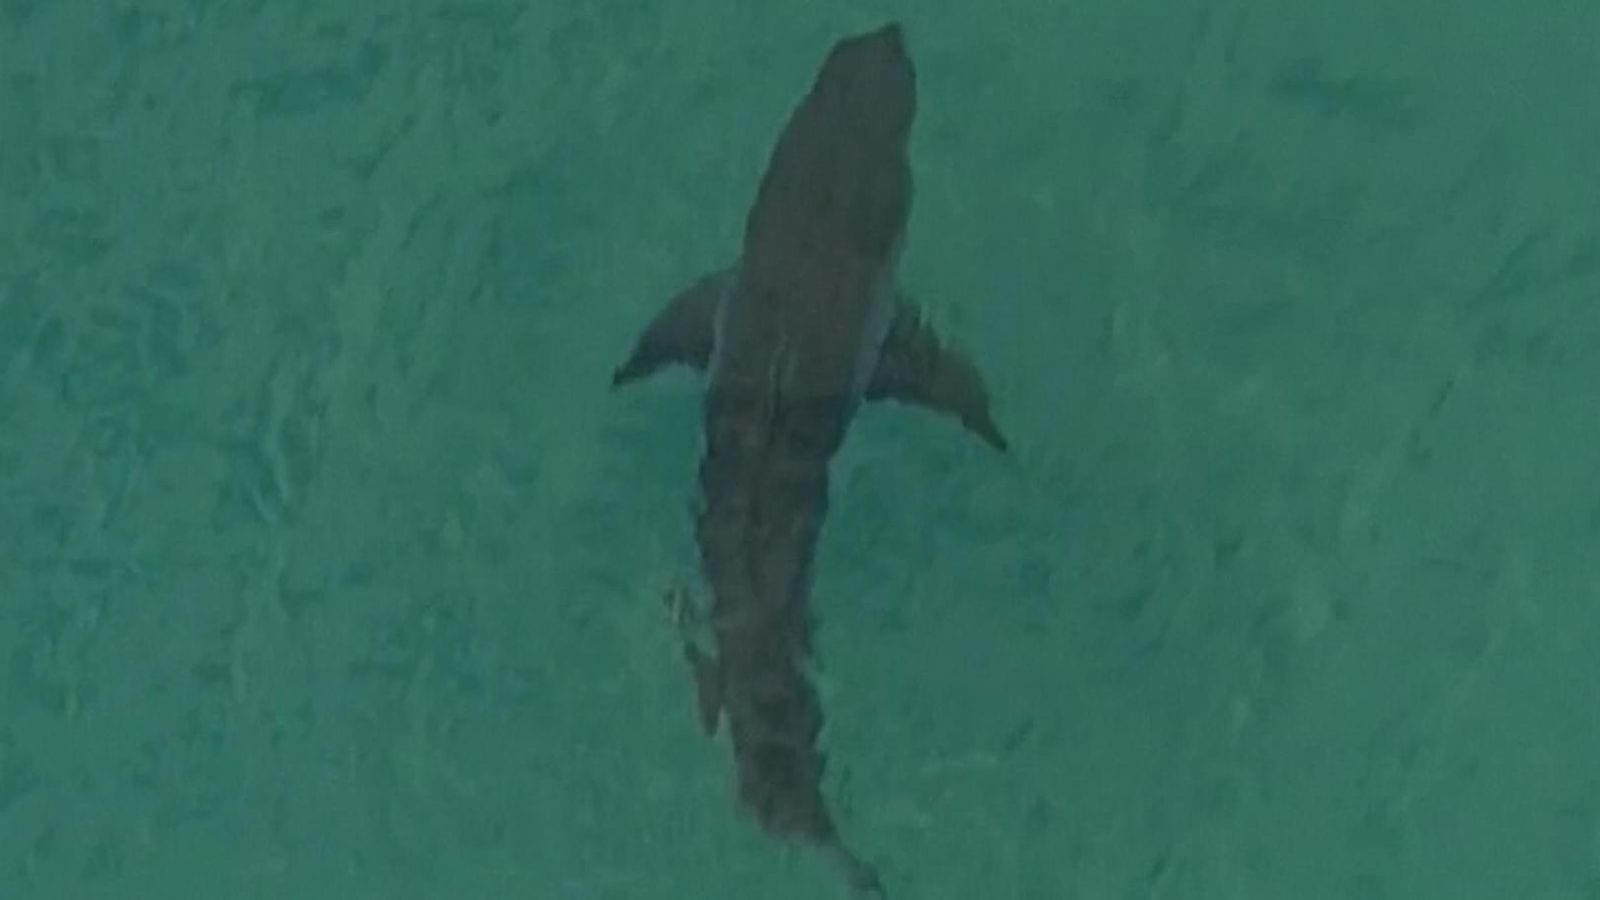 Australia: Surfer dies after 10-foot white shark attacks him